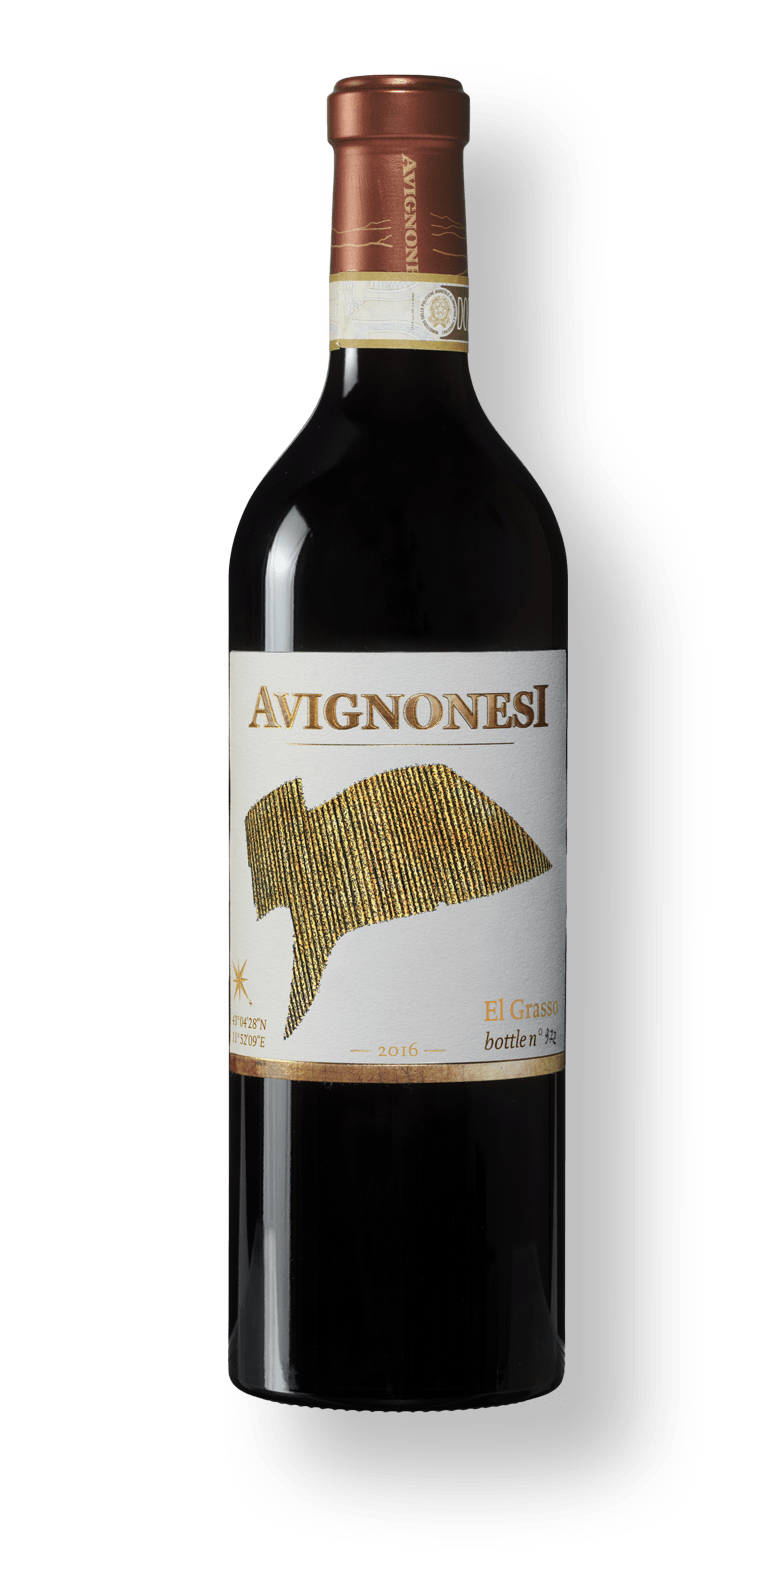 Avignonesi 'El Grasso' DOCG Vino Nobile di Montepulciano 2016